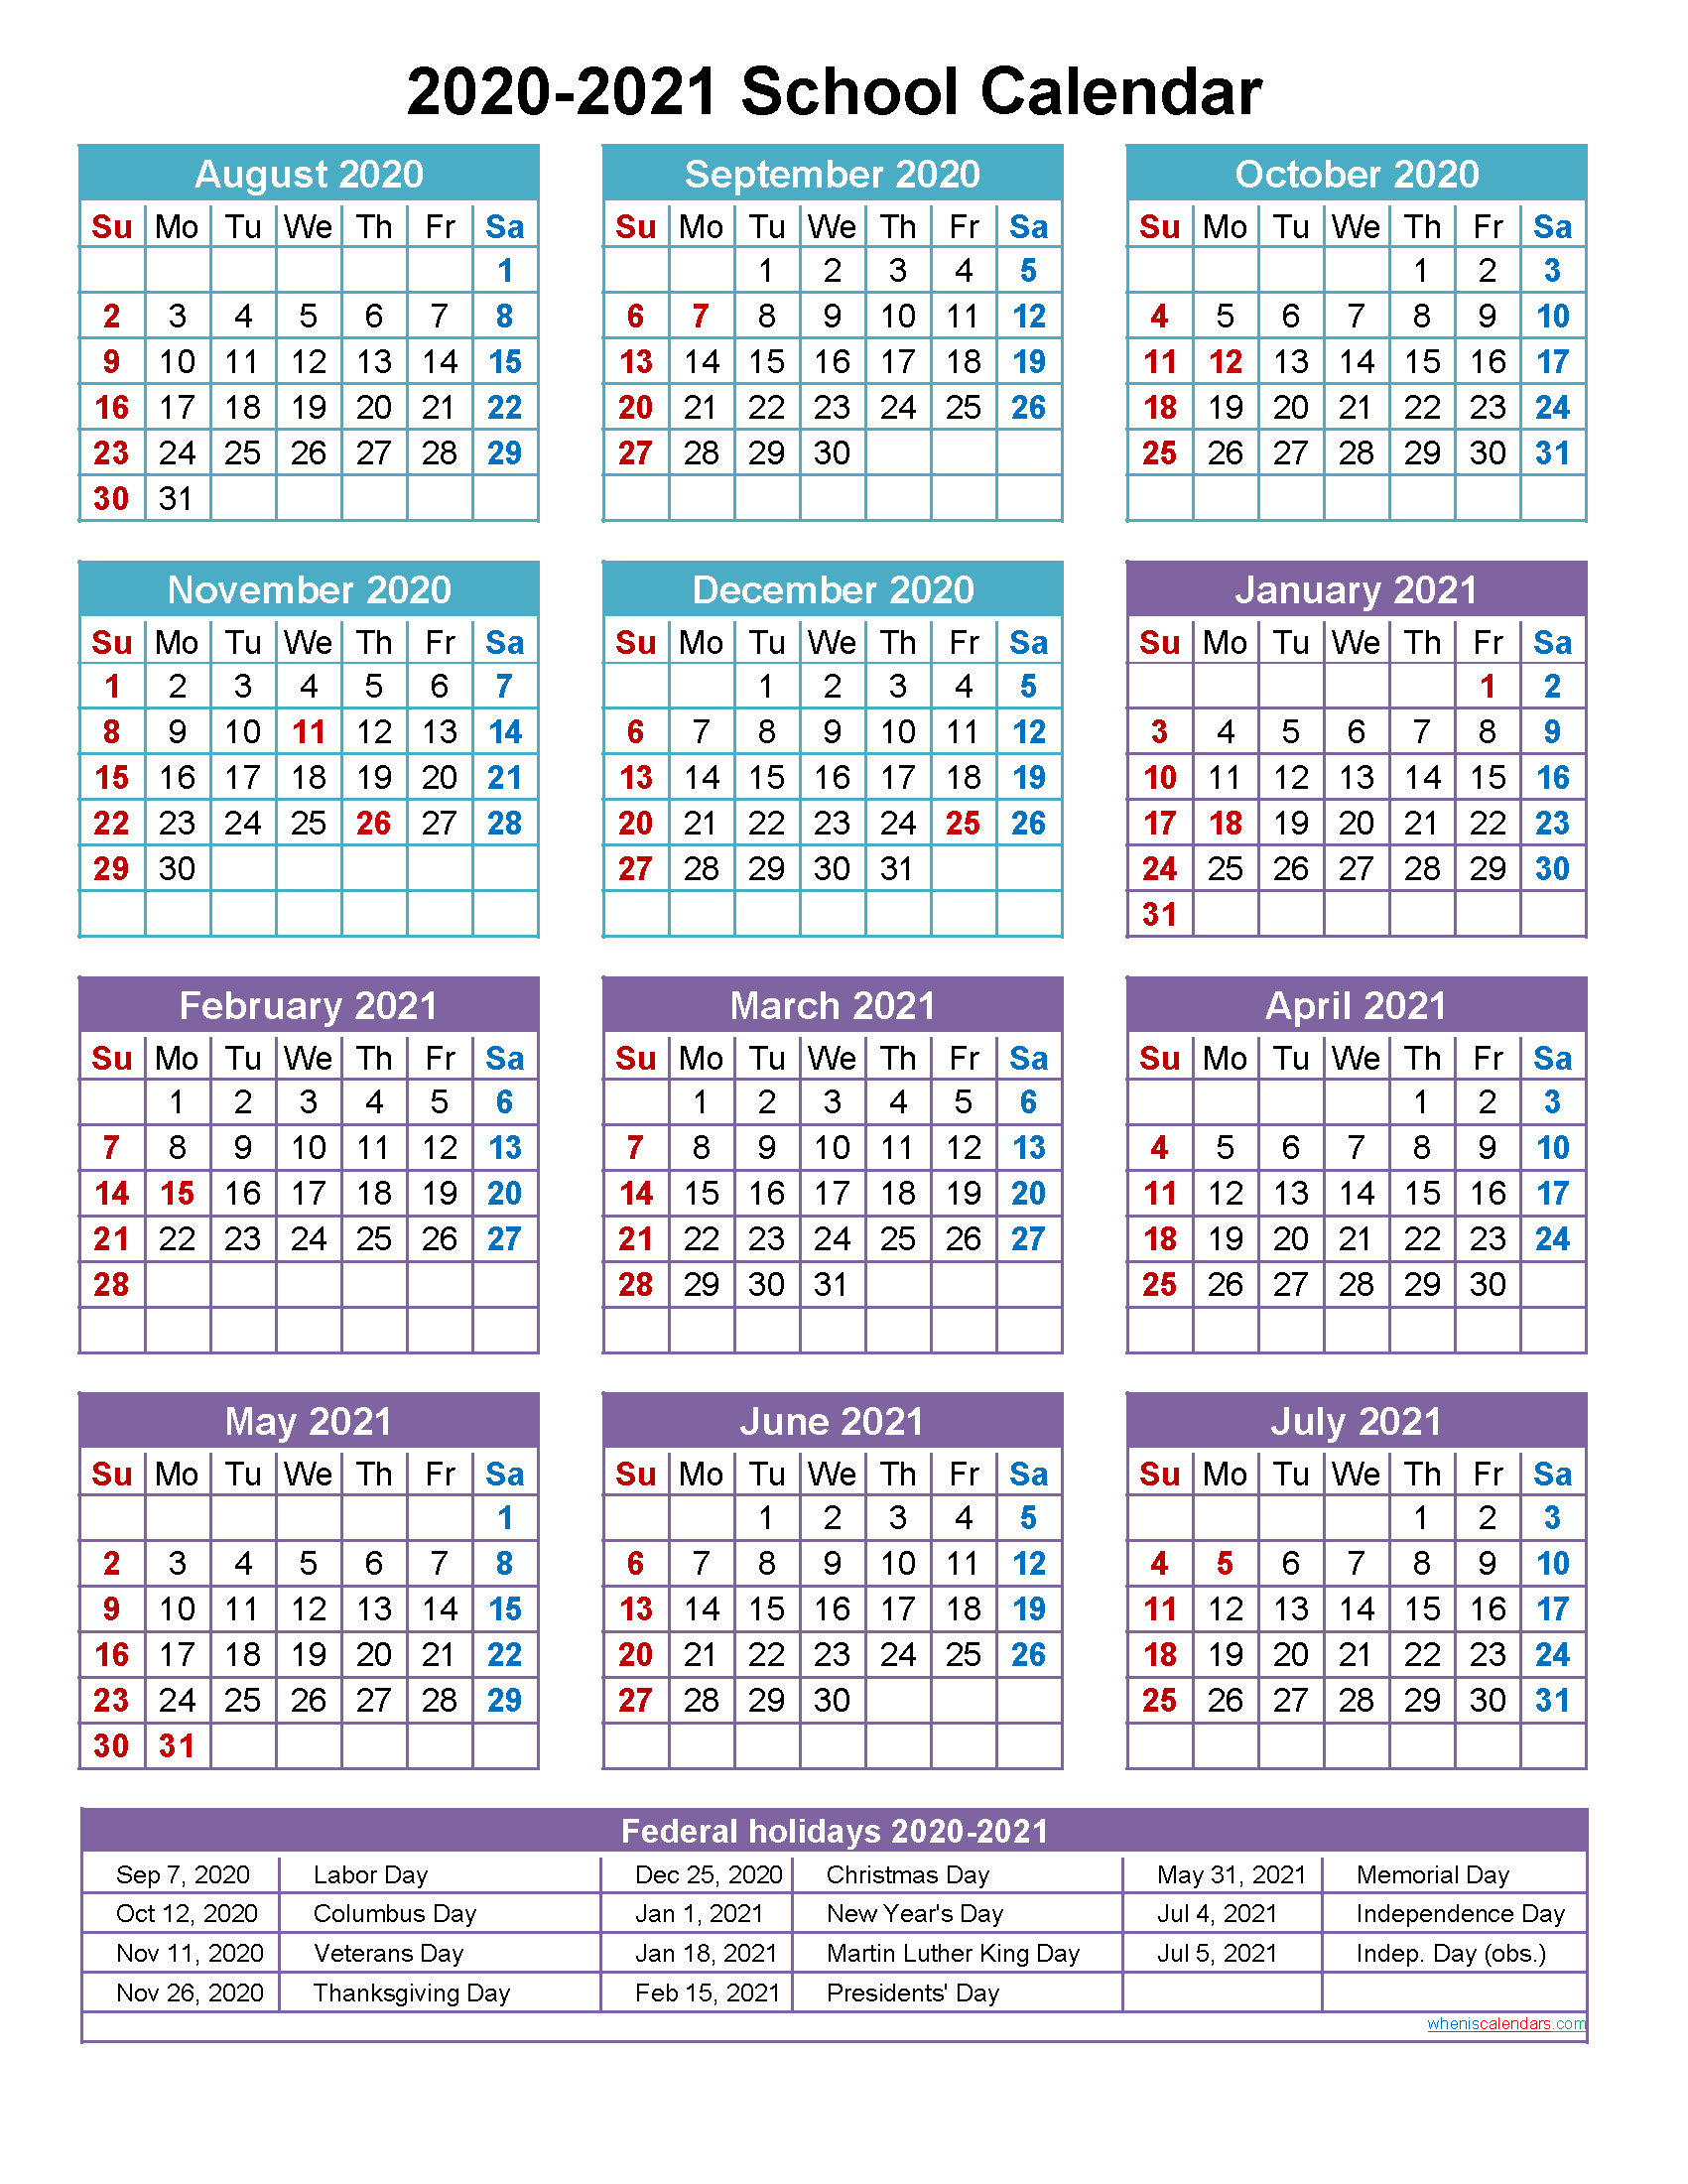 2020 and 2021 School Calendar Printable